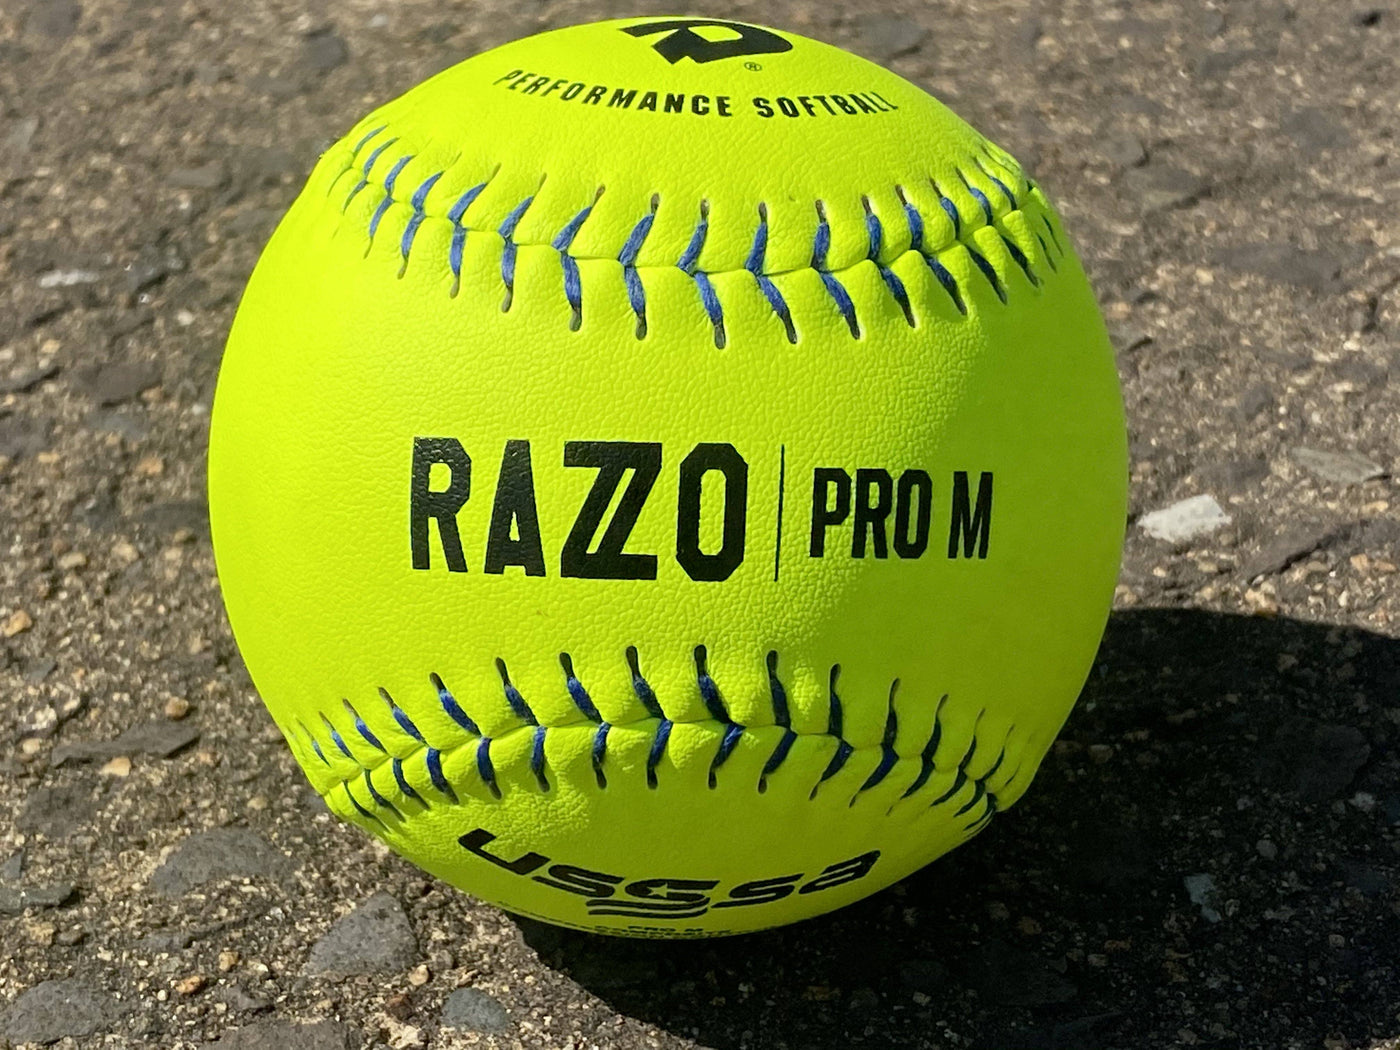 DeMarini Razzo 12 Pro M USSSA Slowpitch Softballs (Dozen): WTDRZPMC12UB